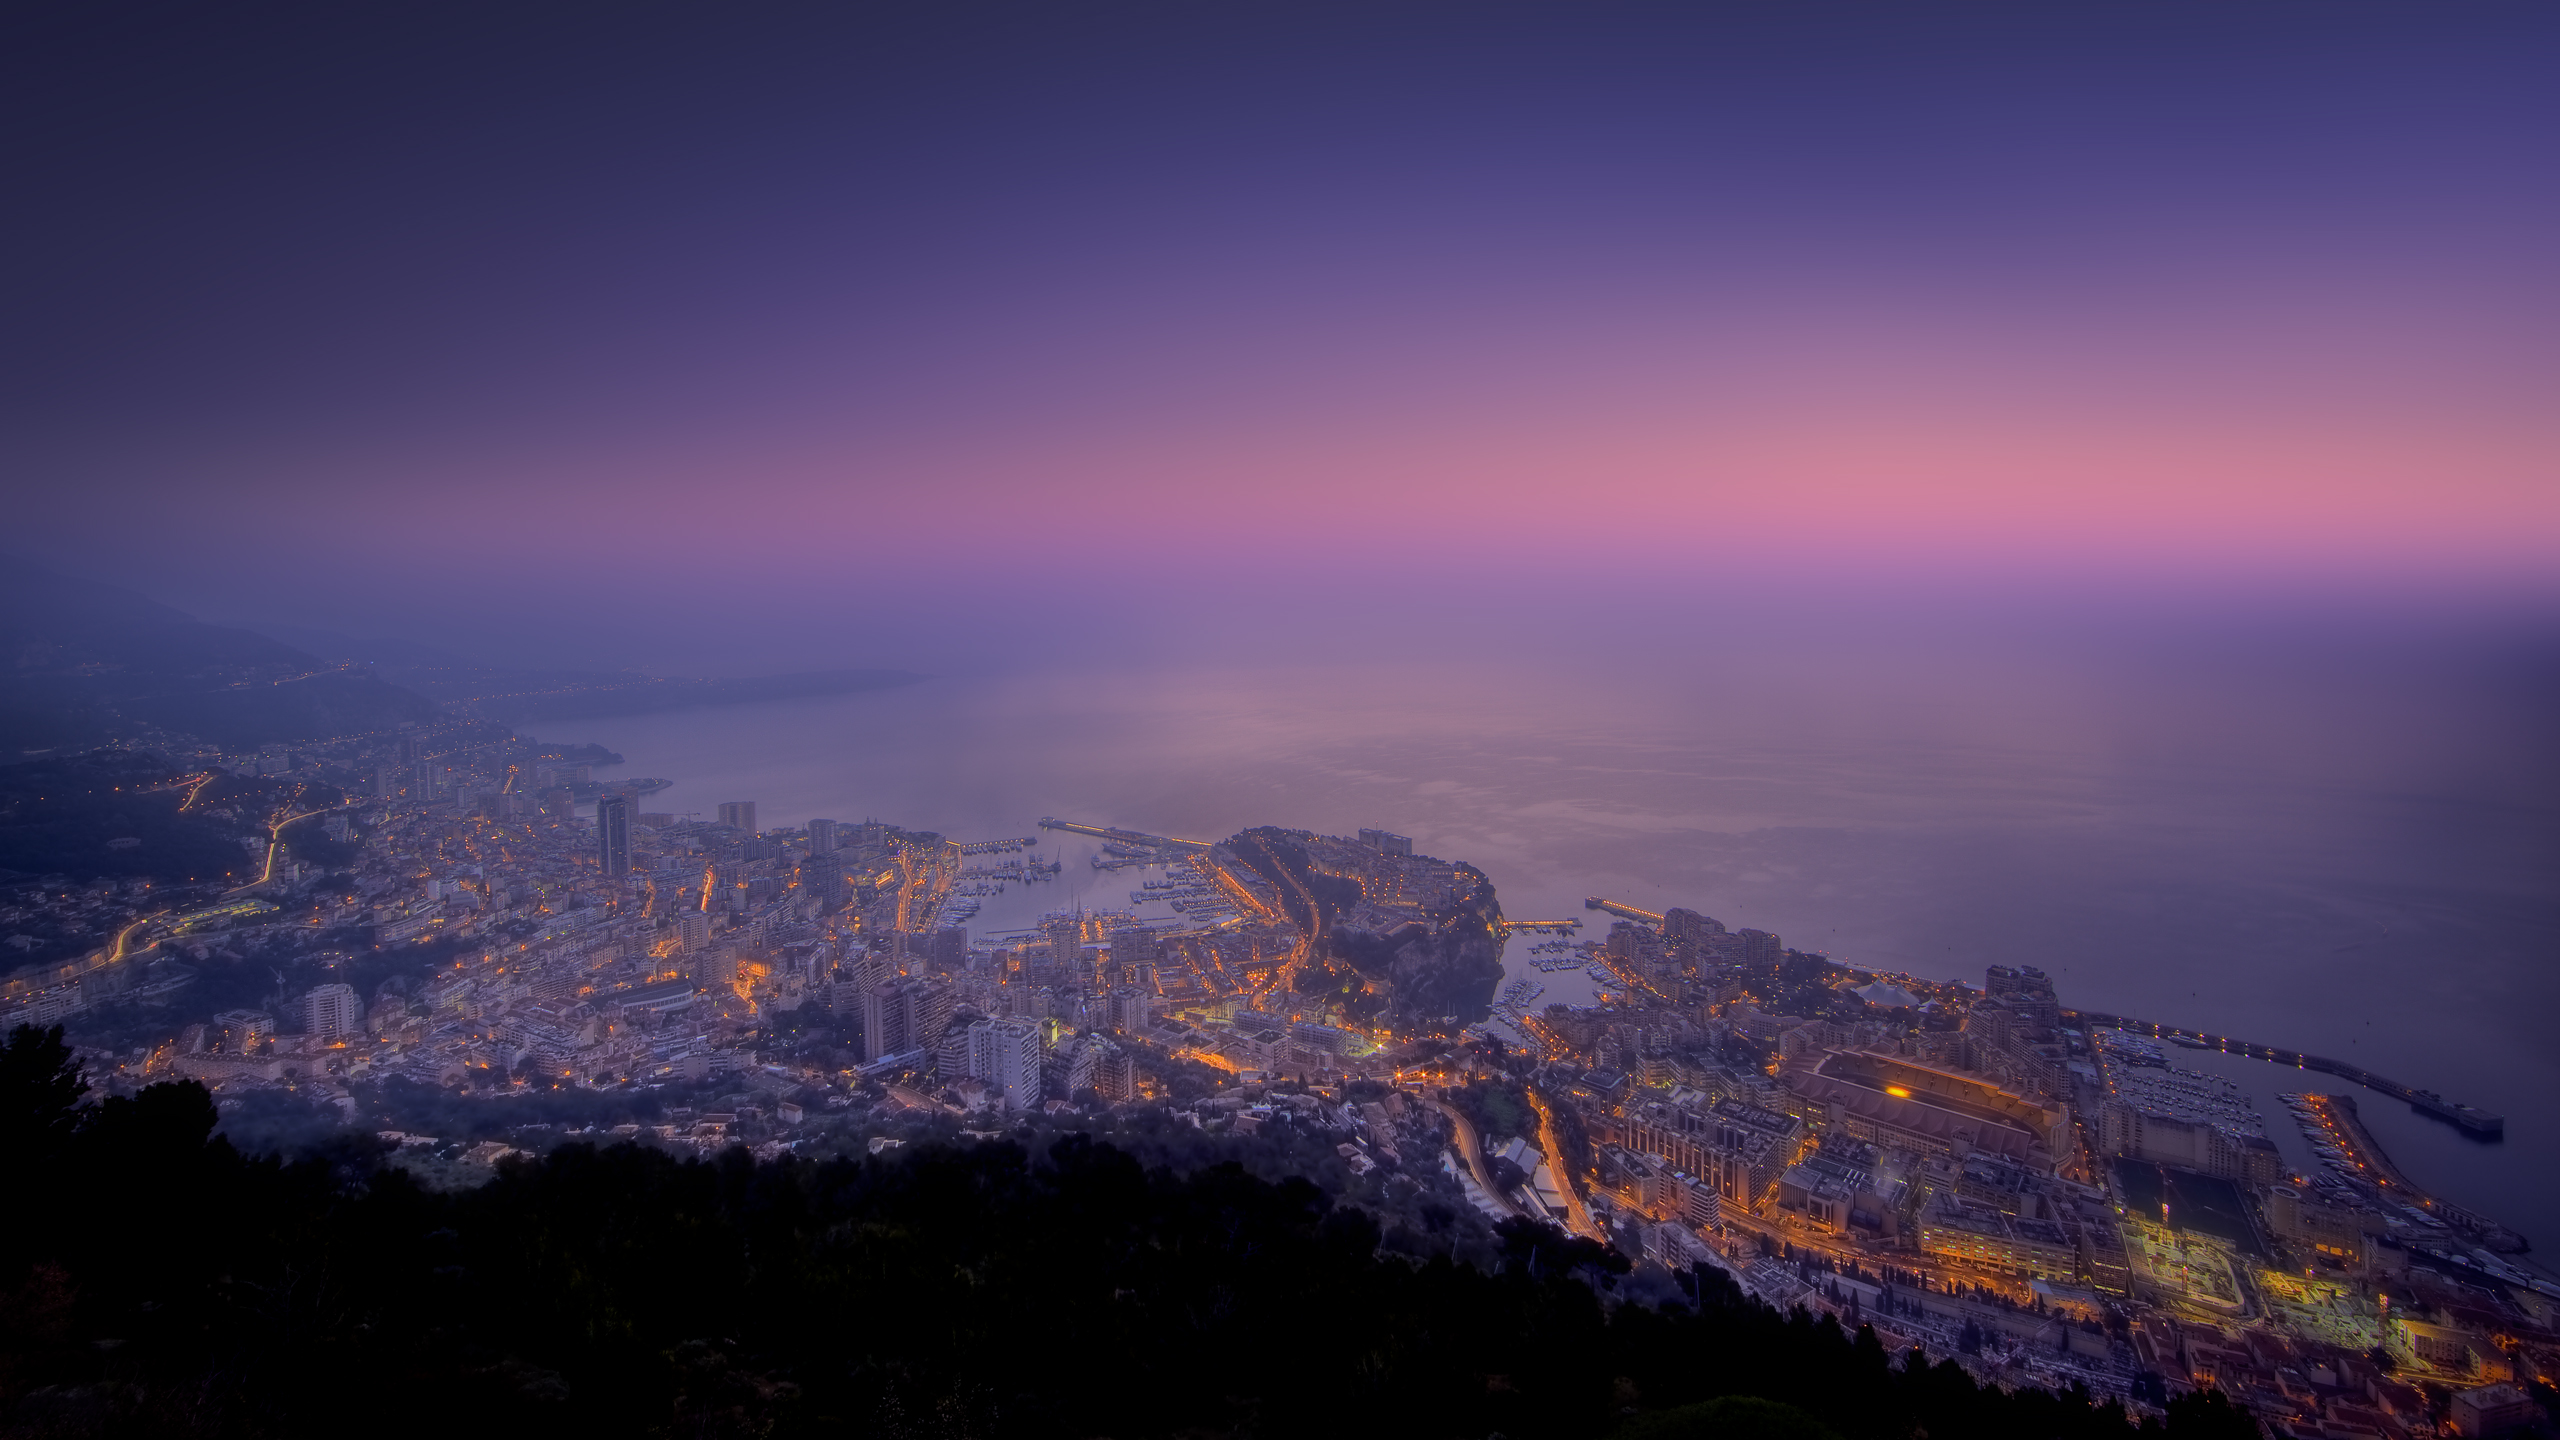 Monaco Sunrise: A stunning high-definition desktop wallpaper showcasing a breathtaking sunrise over Monaco.